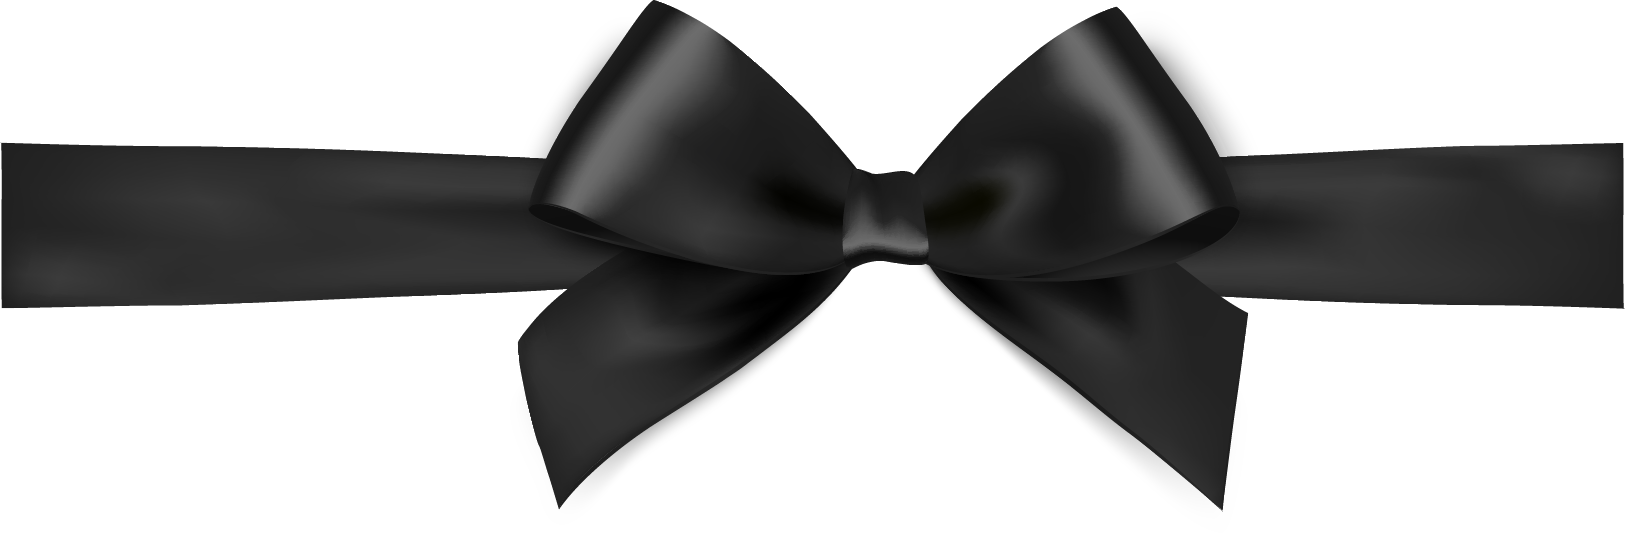 Black Ribbon Bow Graphic PNG